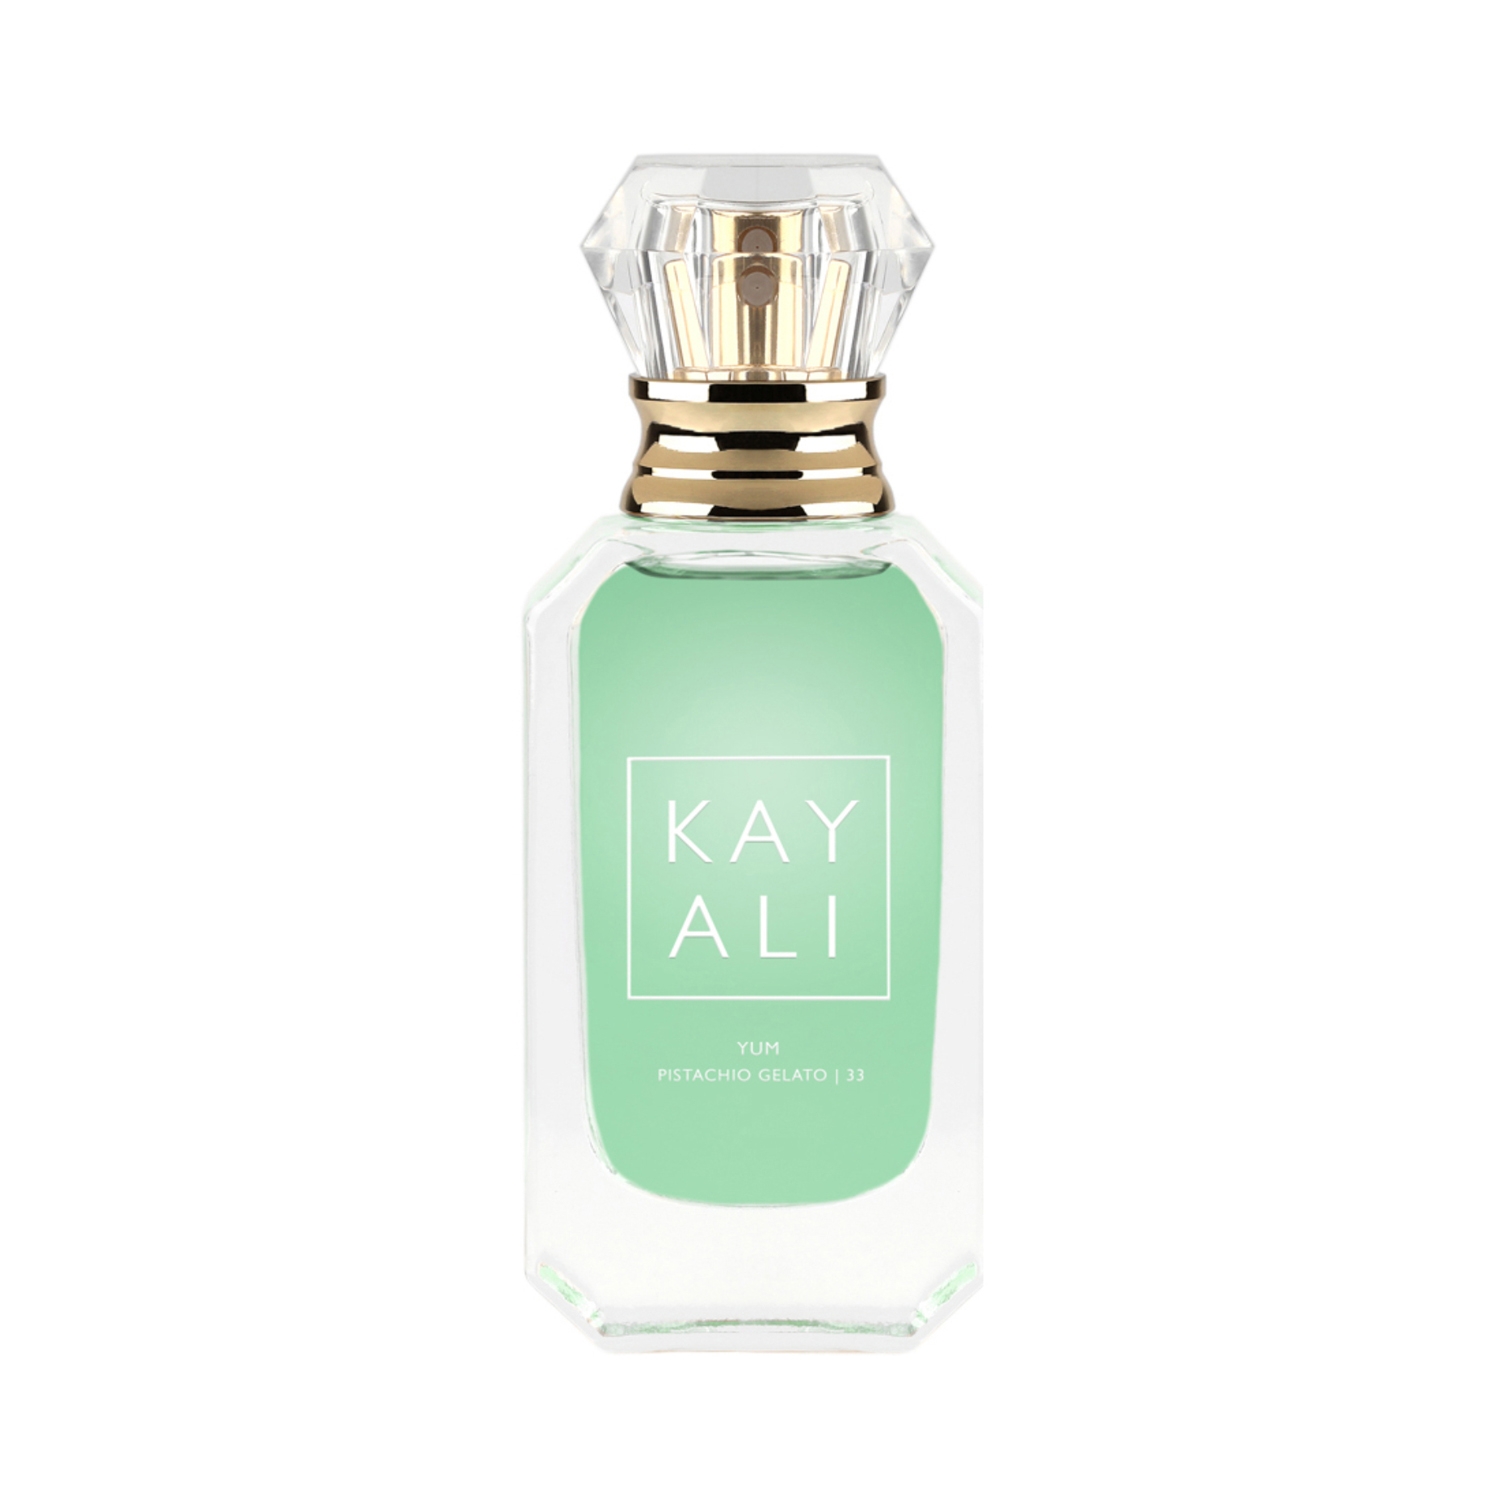 Kayali | Kayali Yum Pistachio Gelato 33 Eau De Parfum Intense (10ml)